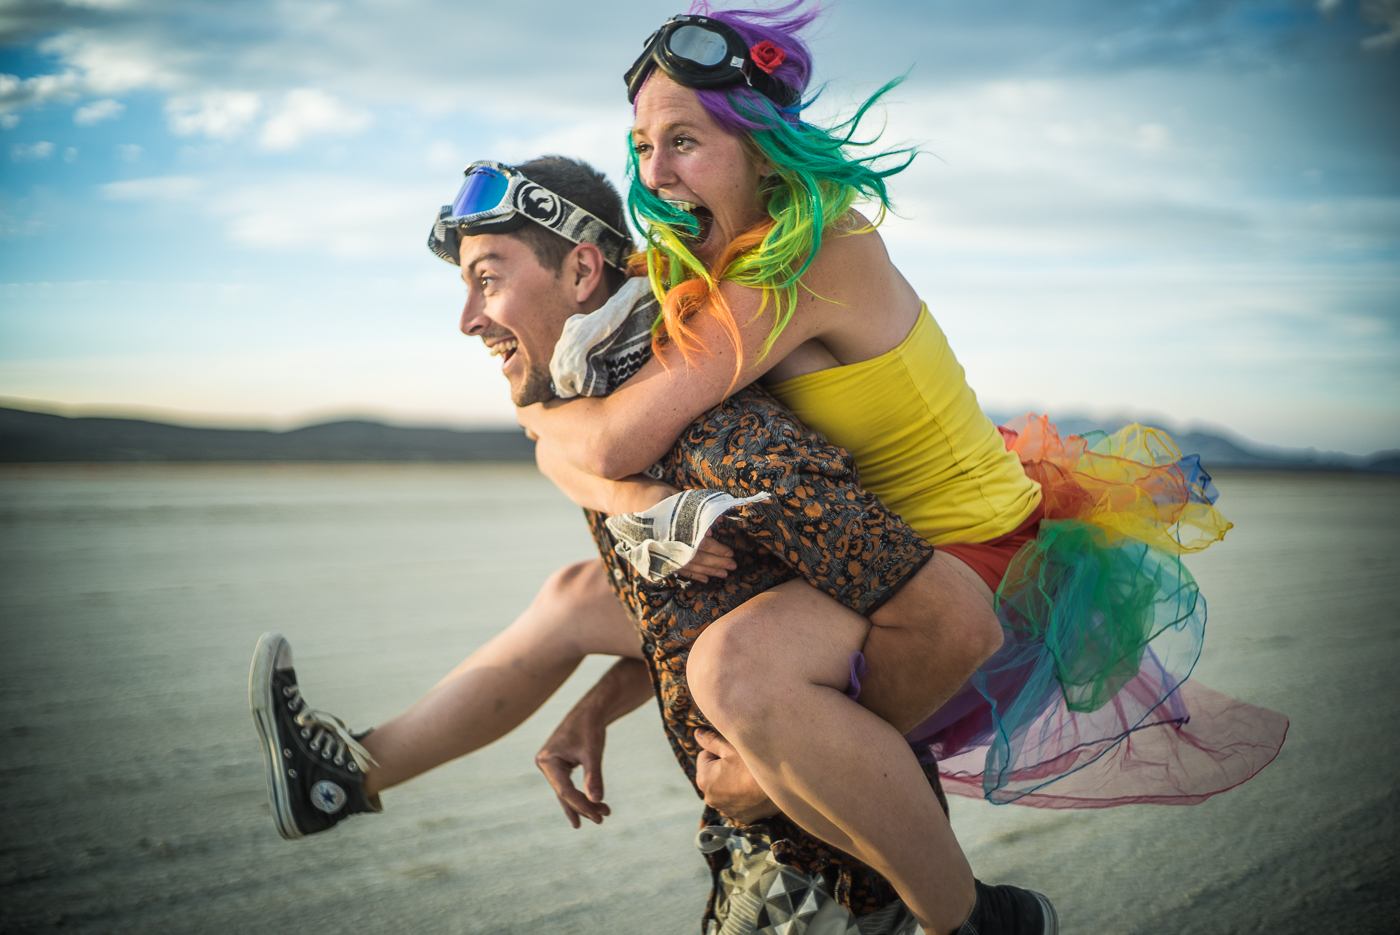 Burning Man 2014: Portraits of a Camp portraits on northtosouth.us